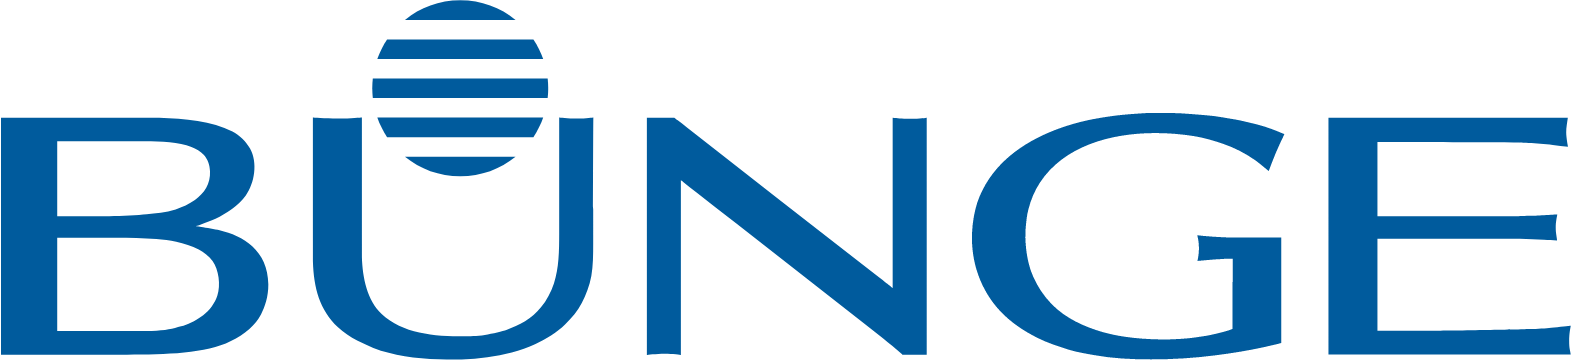 Bunge logo large (transparent PNG)